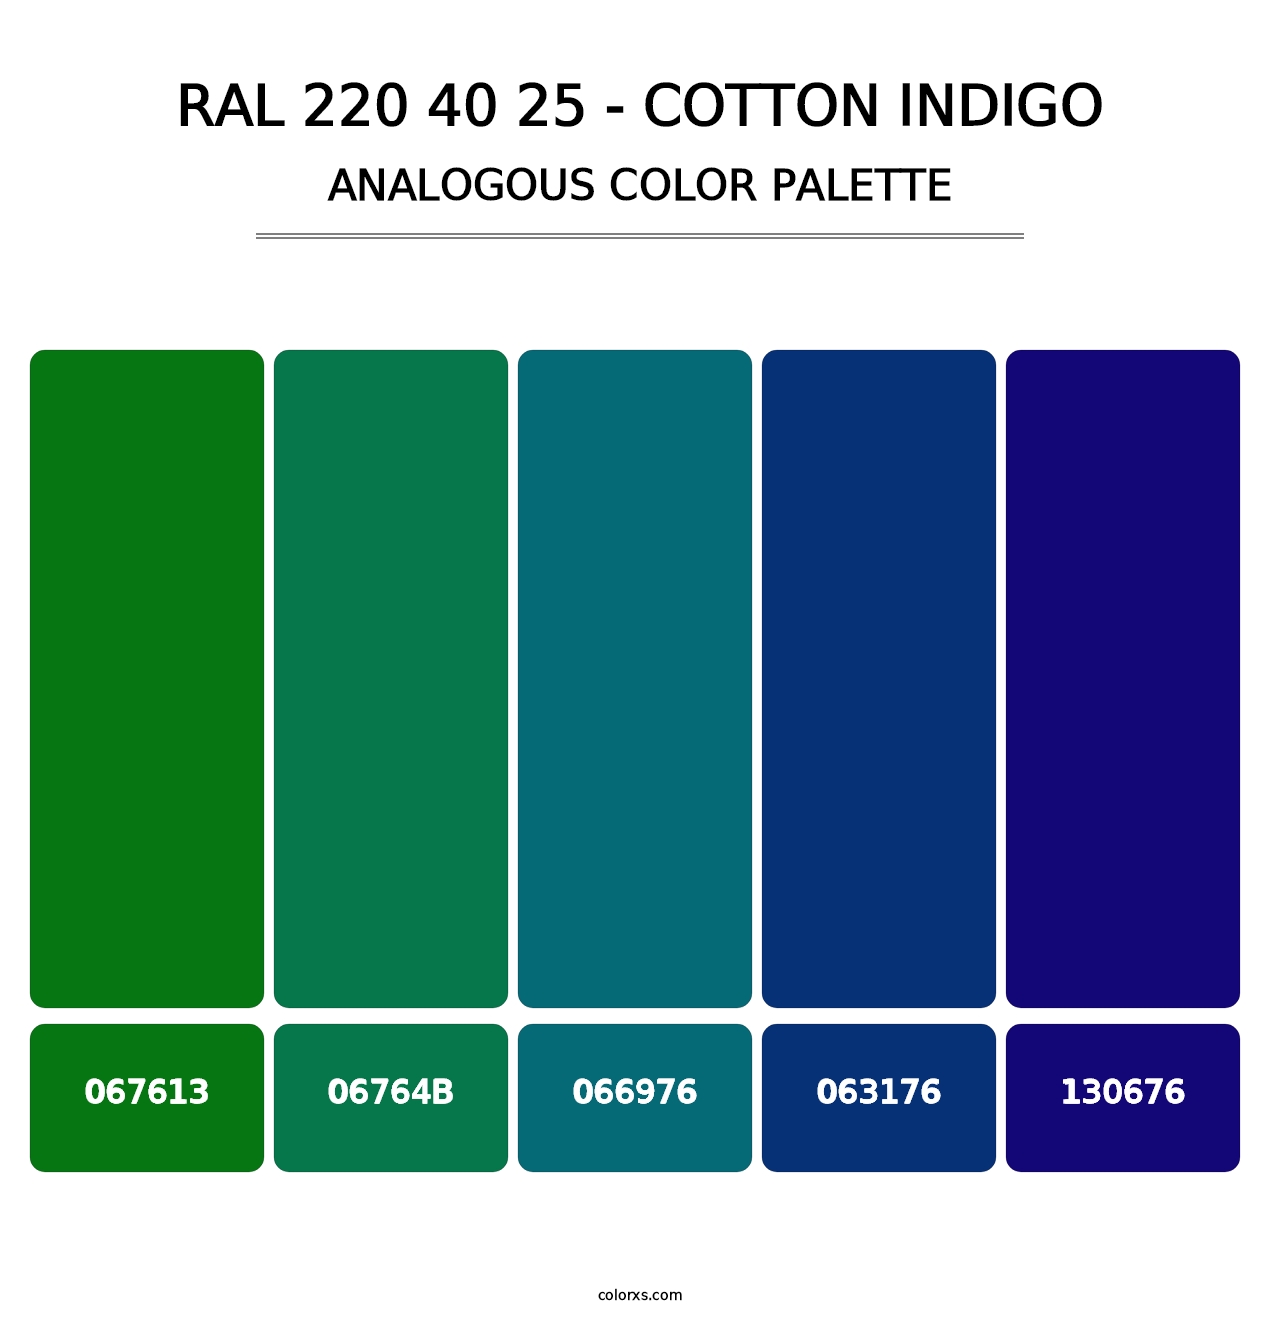 RAL 220 40 25 - Cotton Indigo - Analogous Color Palette